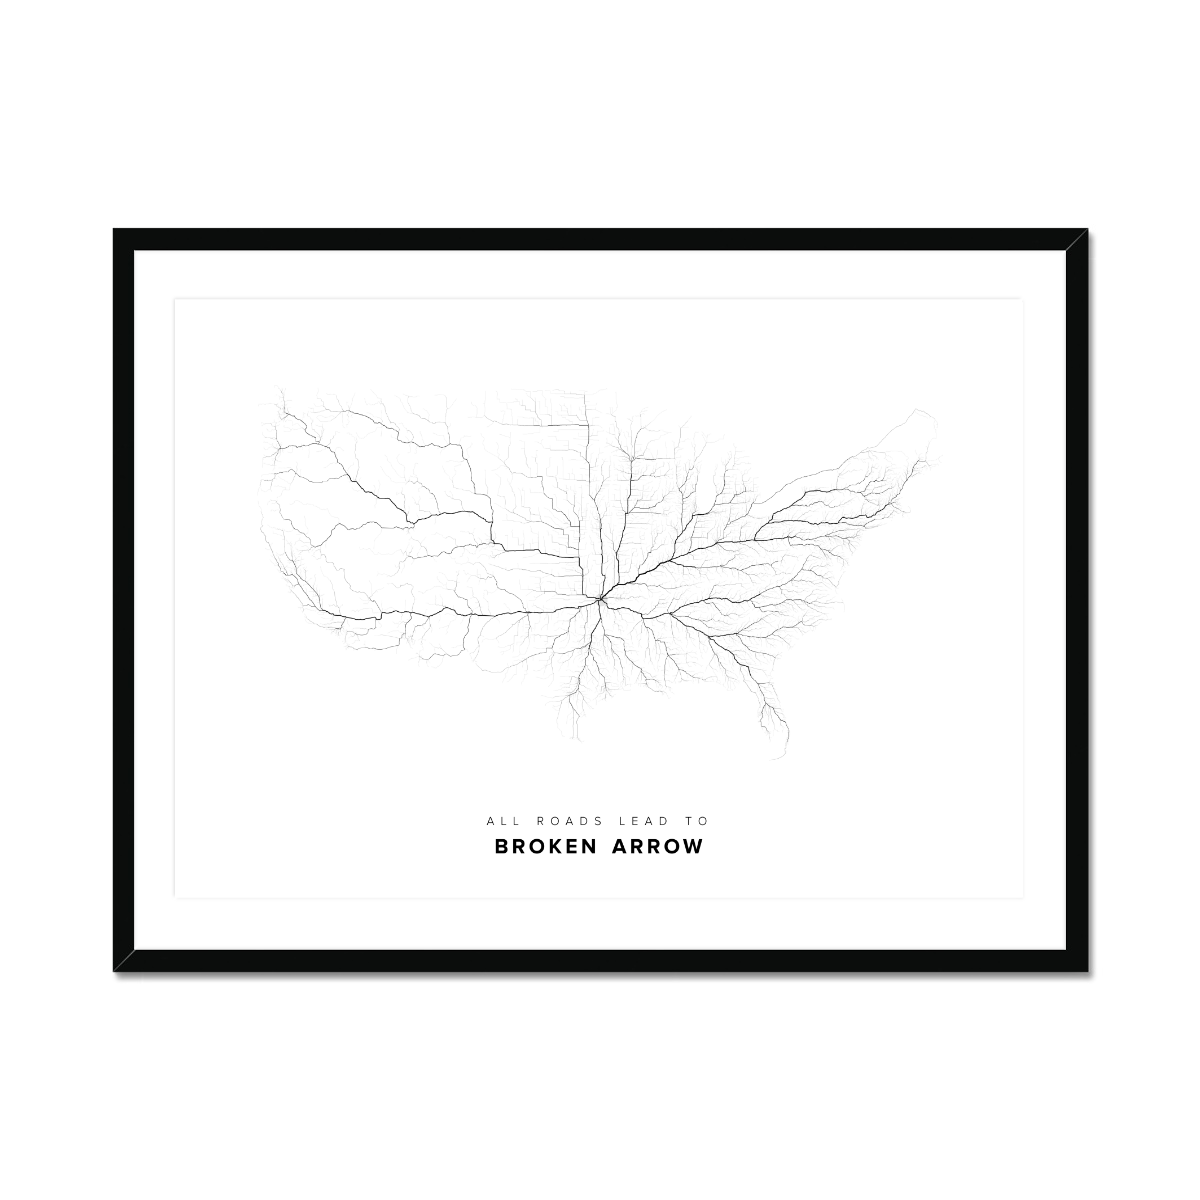 All roads lead to Broken Arrow (United States of America) Fine Art Map Print